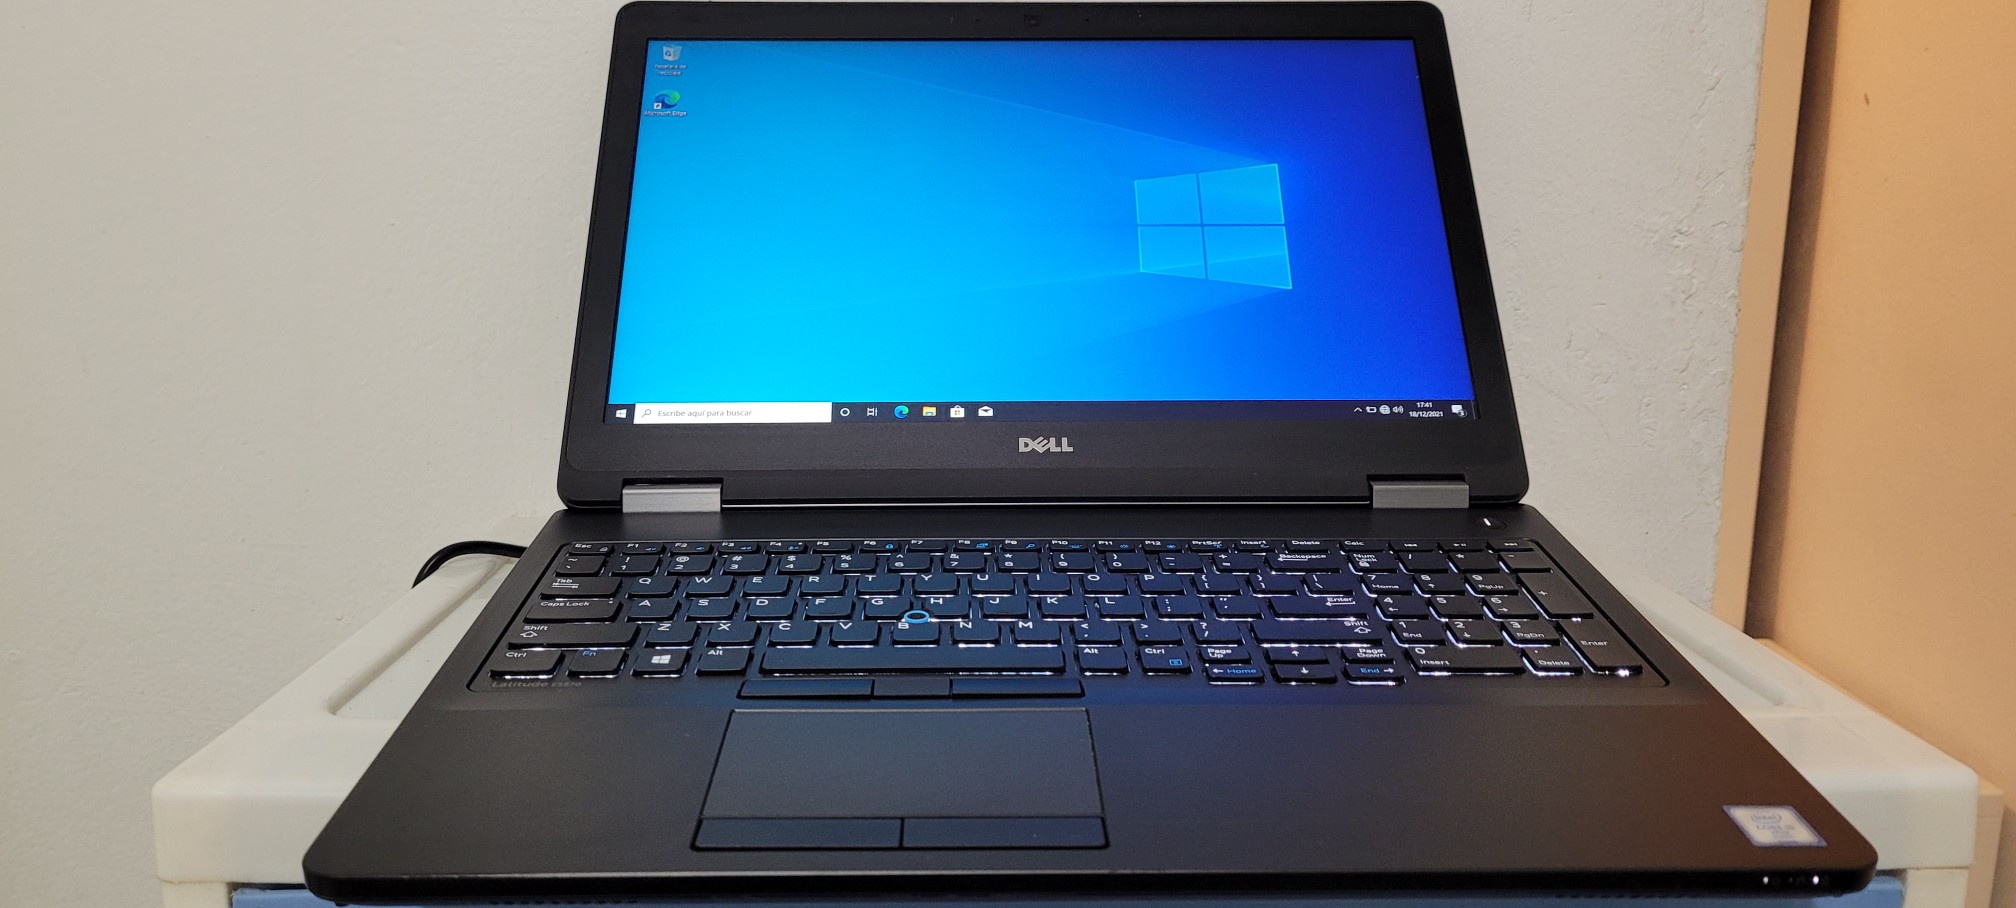 computadoras y laptops - Laptop Dell 5570 17 Pulg Core i7 6ta Ram 16gb ddr4 Disco 256gb SSD Video 8gb 0